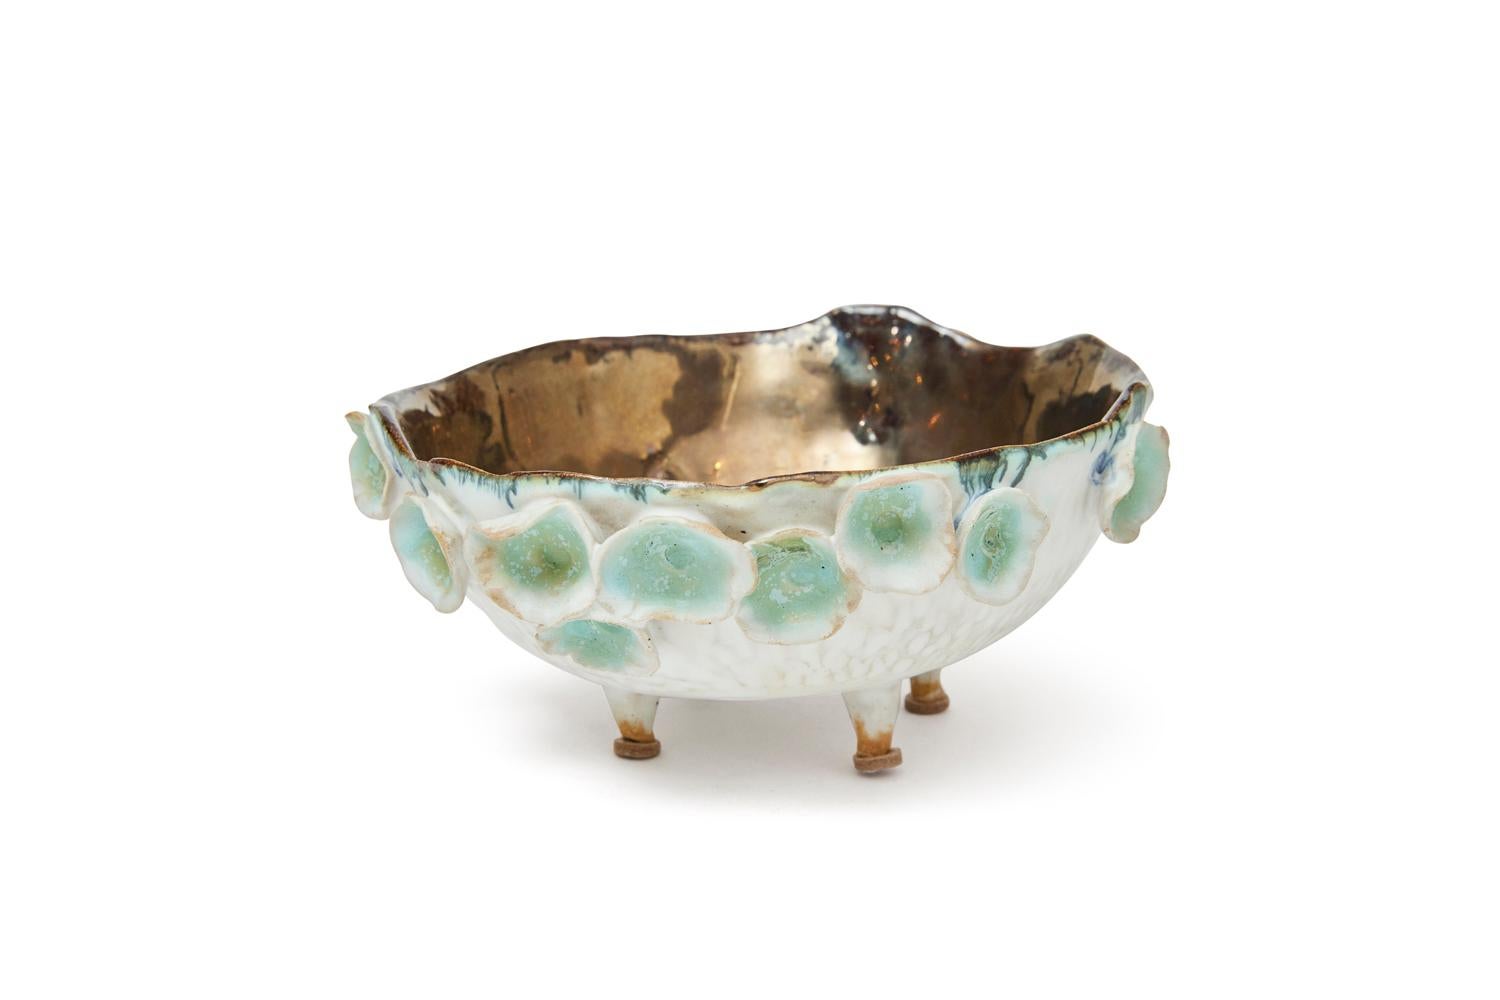 Trish DeMasi
Schneeballen bowl, 2021
Glazed ceramic
Measures: 3.25 x 7.5 x 7 in.